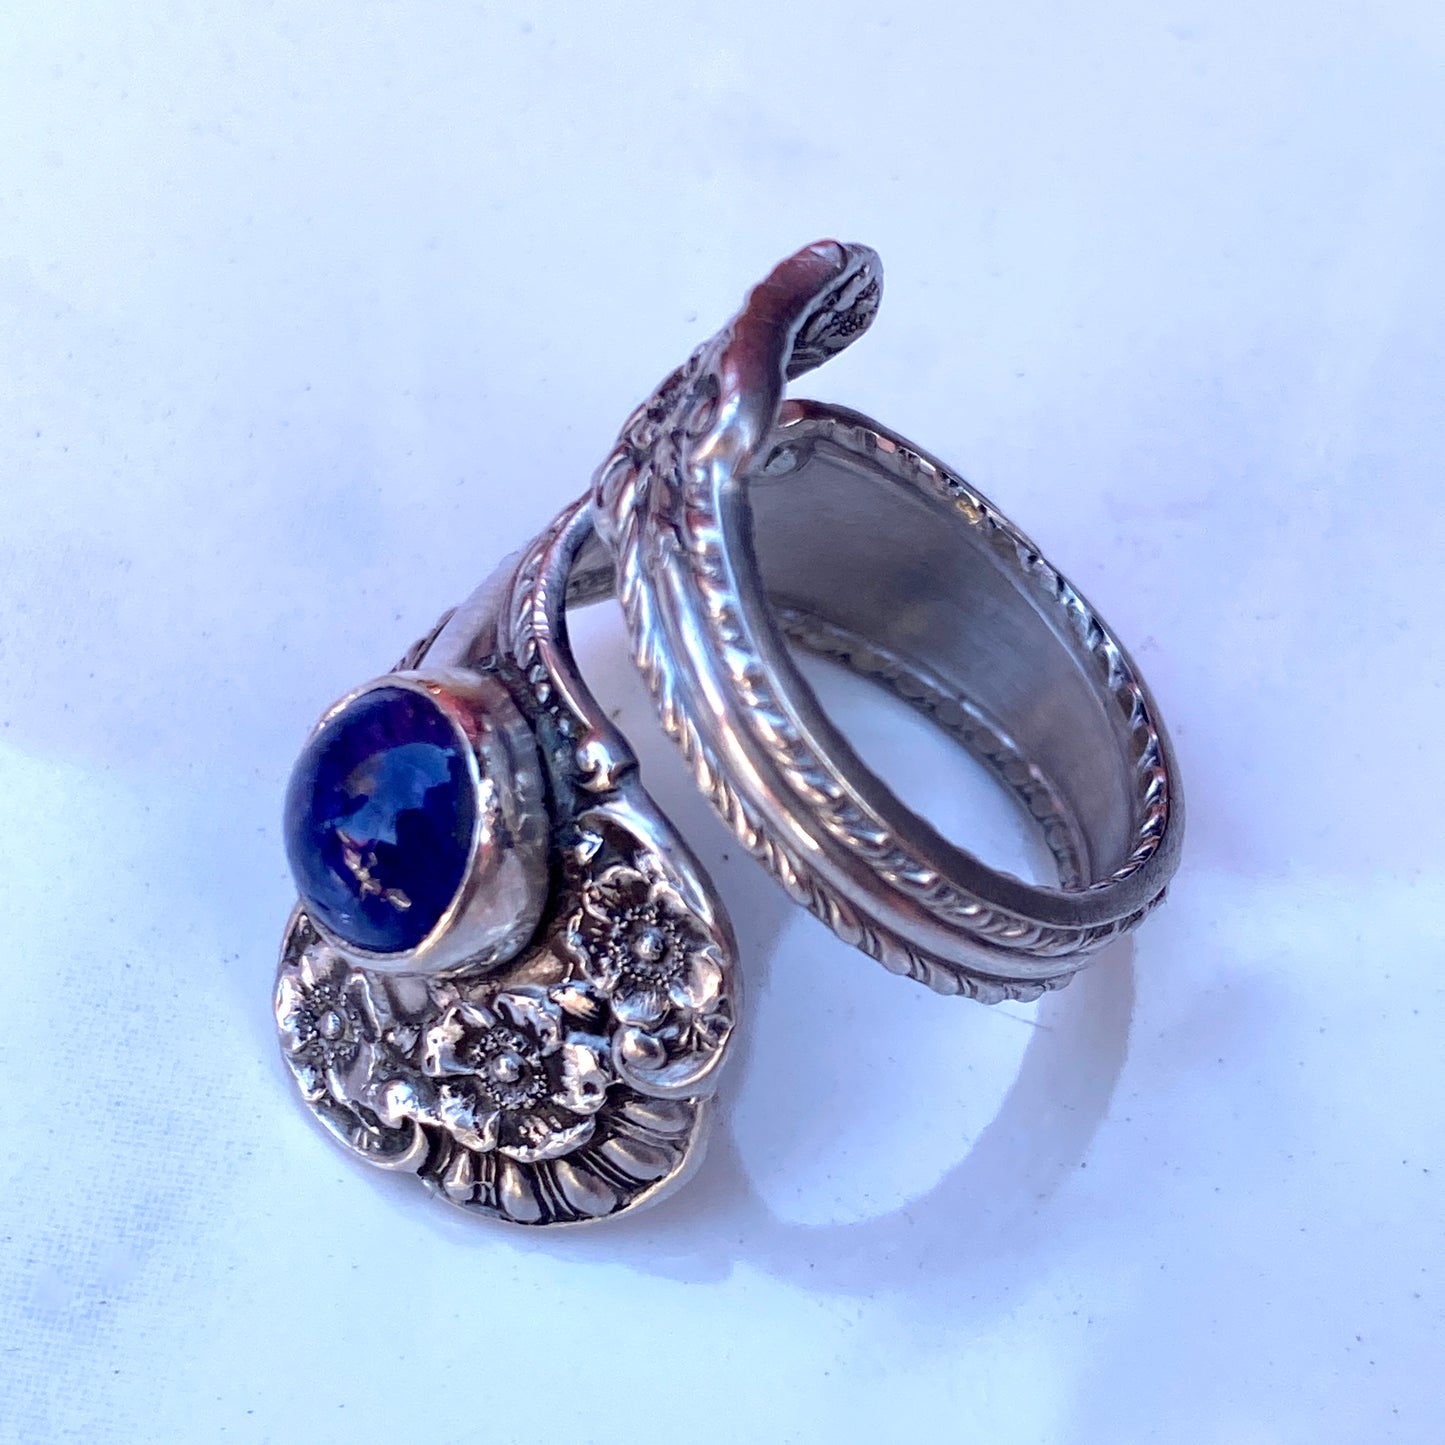 Vintage Sterling Silver Spoon Ring with Tanzanite gemstones.